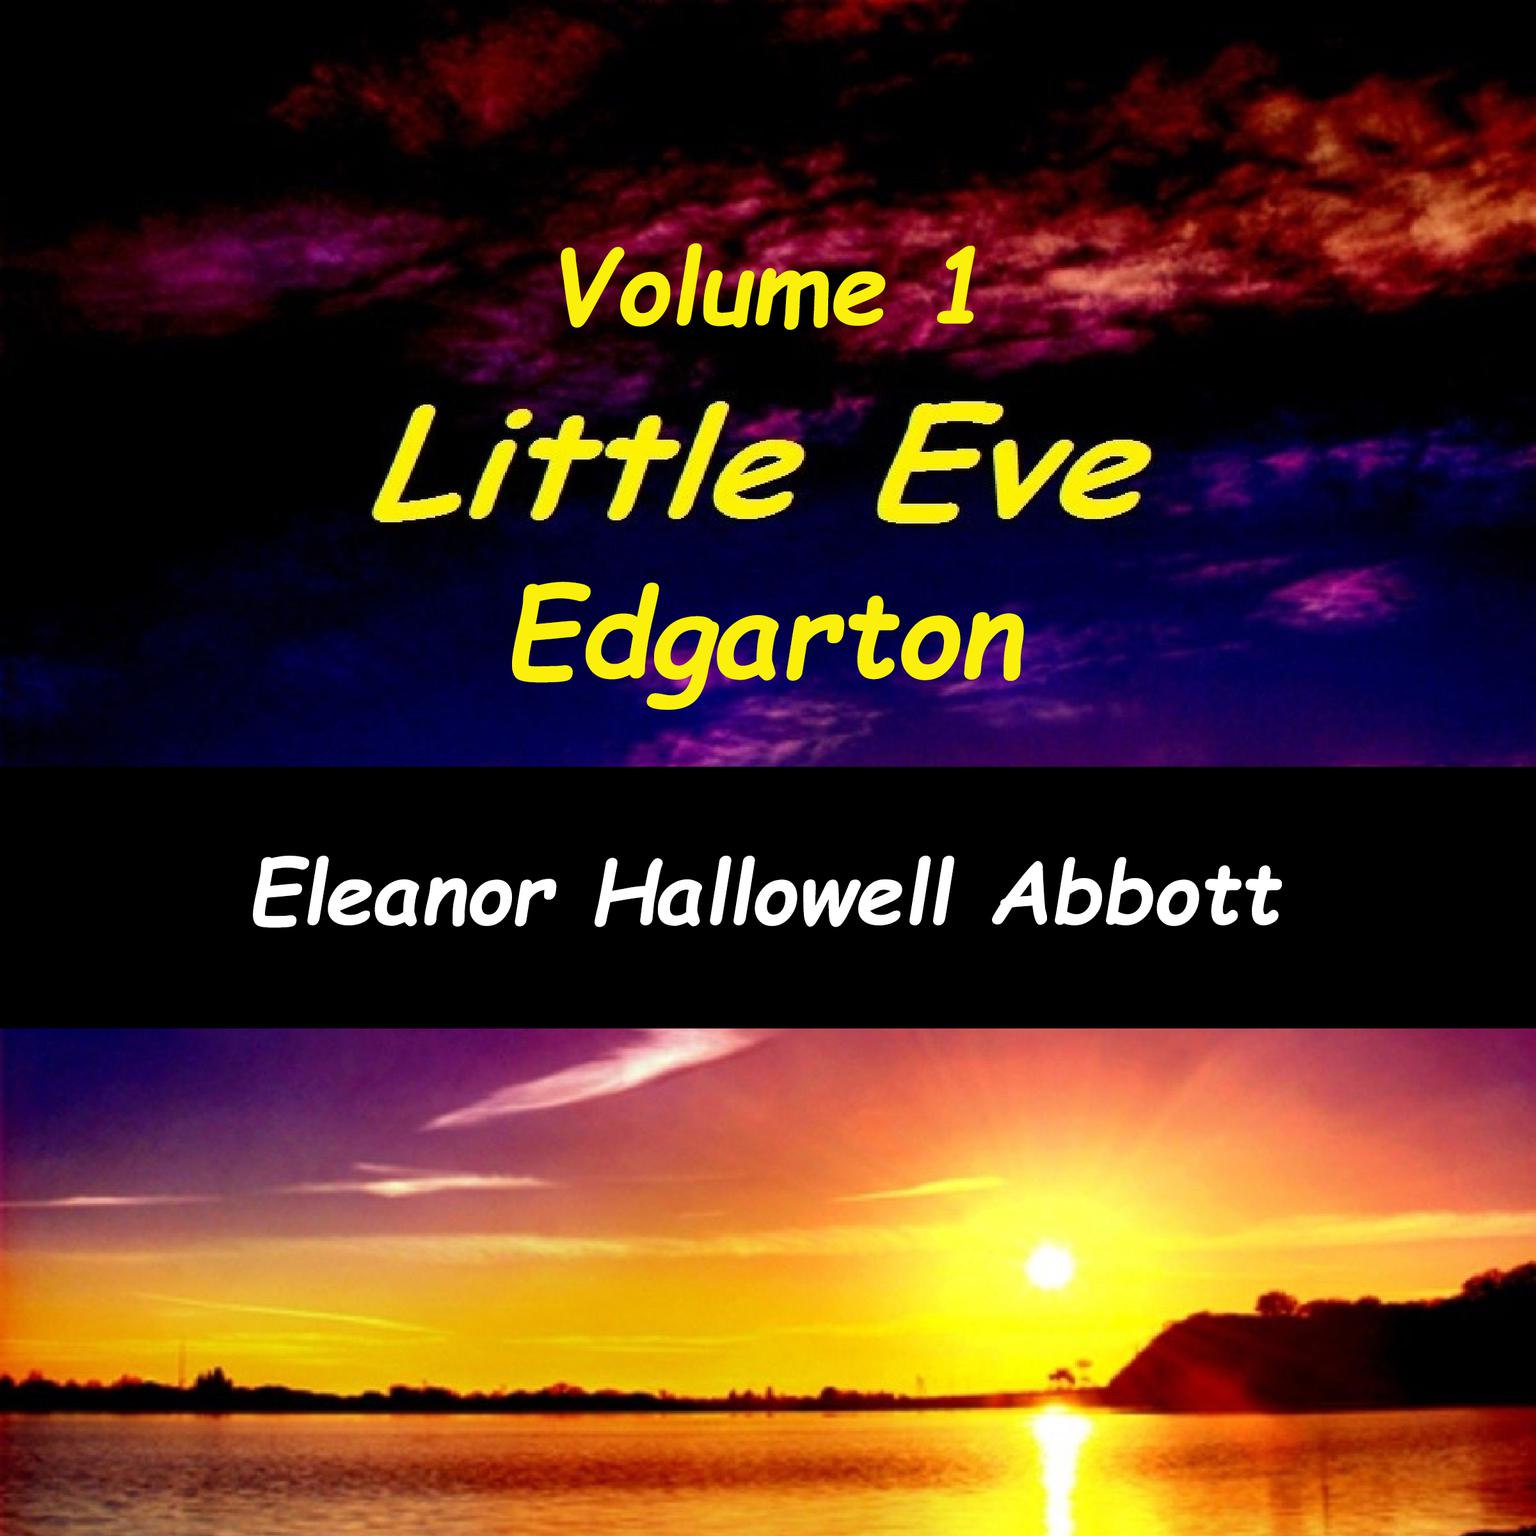 Little Eve Edgarton Volume 1 (Abridged) Audiobook, by Eleanor Hallowell Abbott